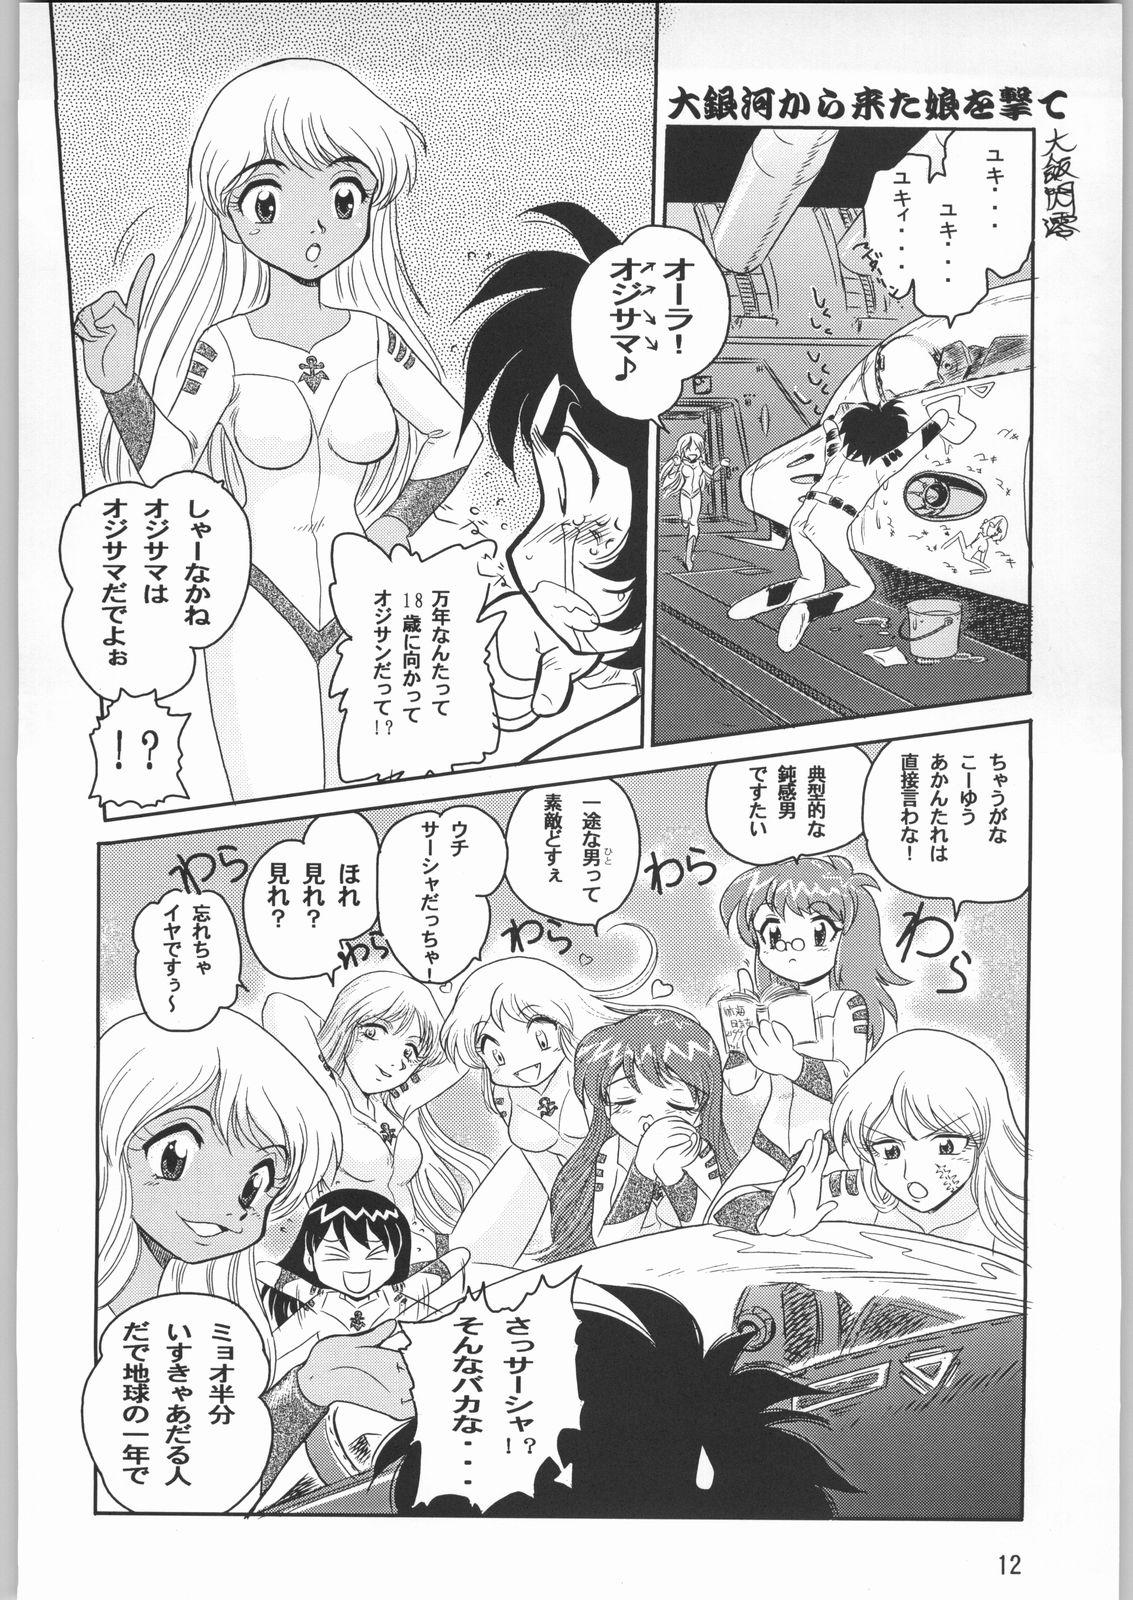 Safadinha Megaton Punch 1 - Space battleship yamato Chobits Pareja - Page 11